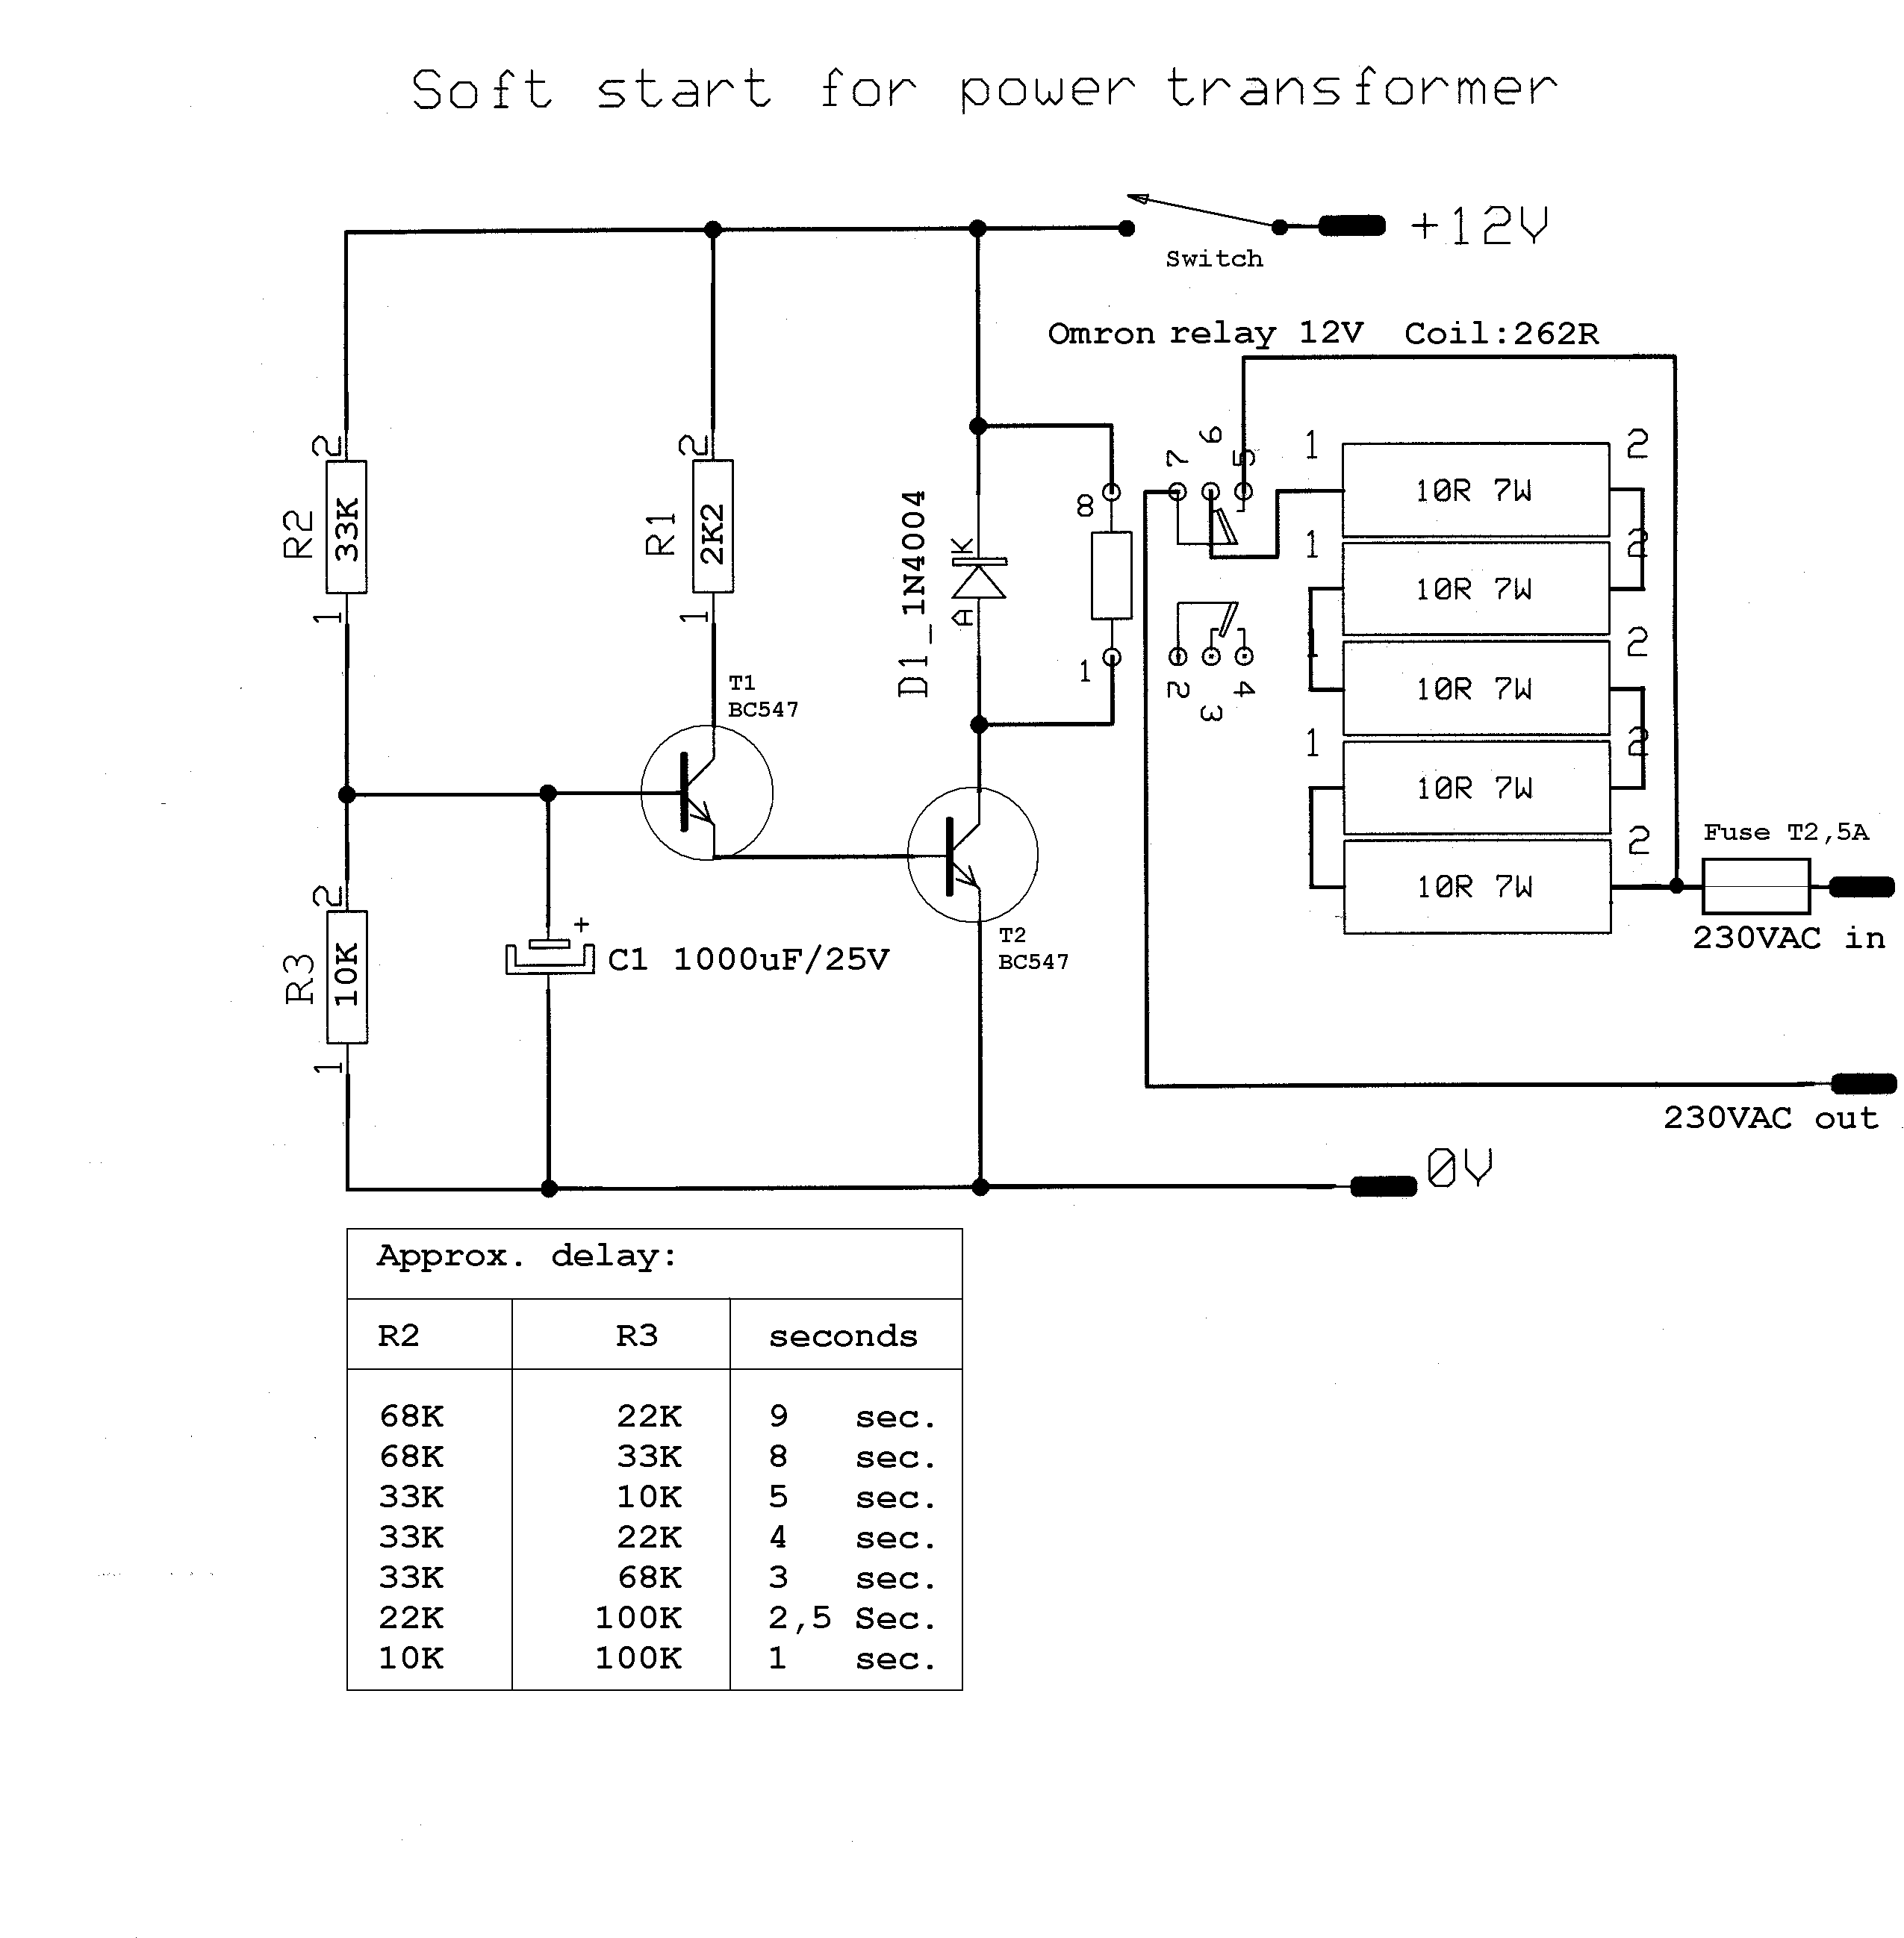 Simple soft start current limiter for DC-amp